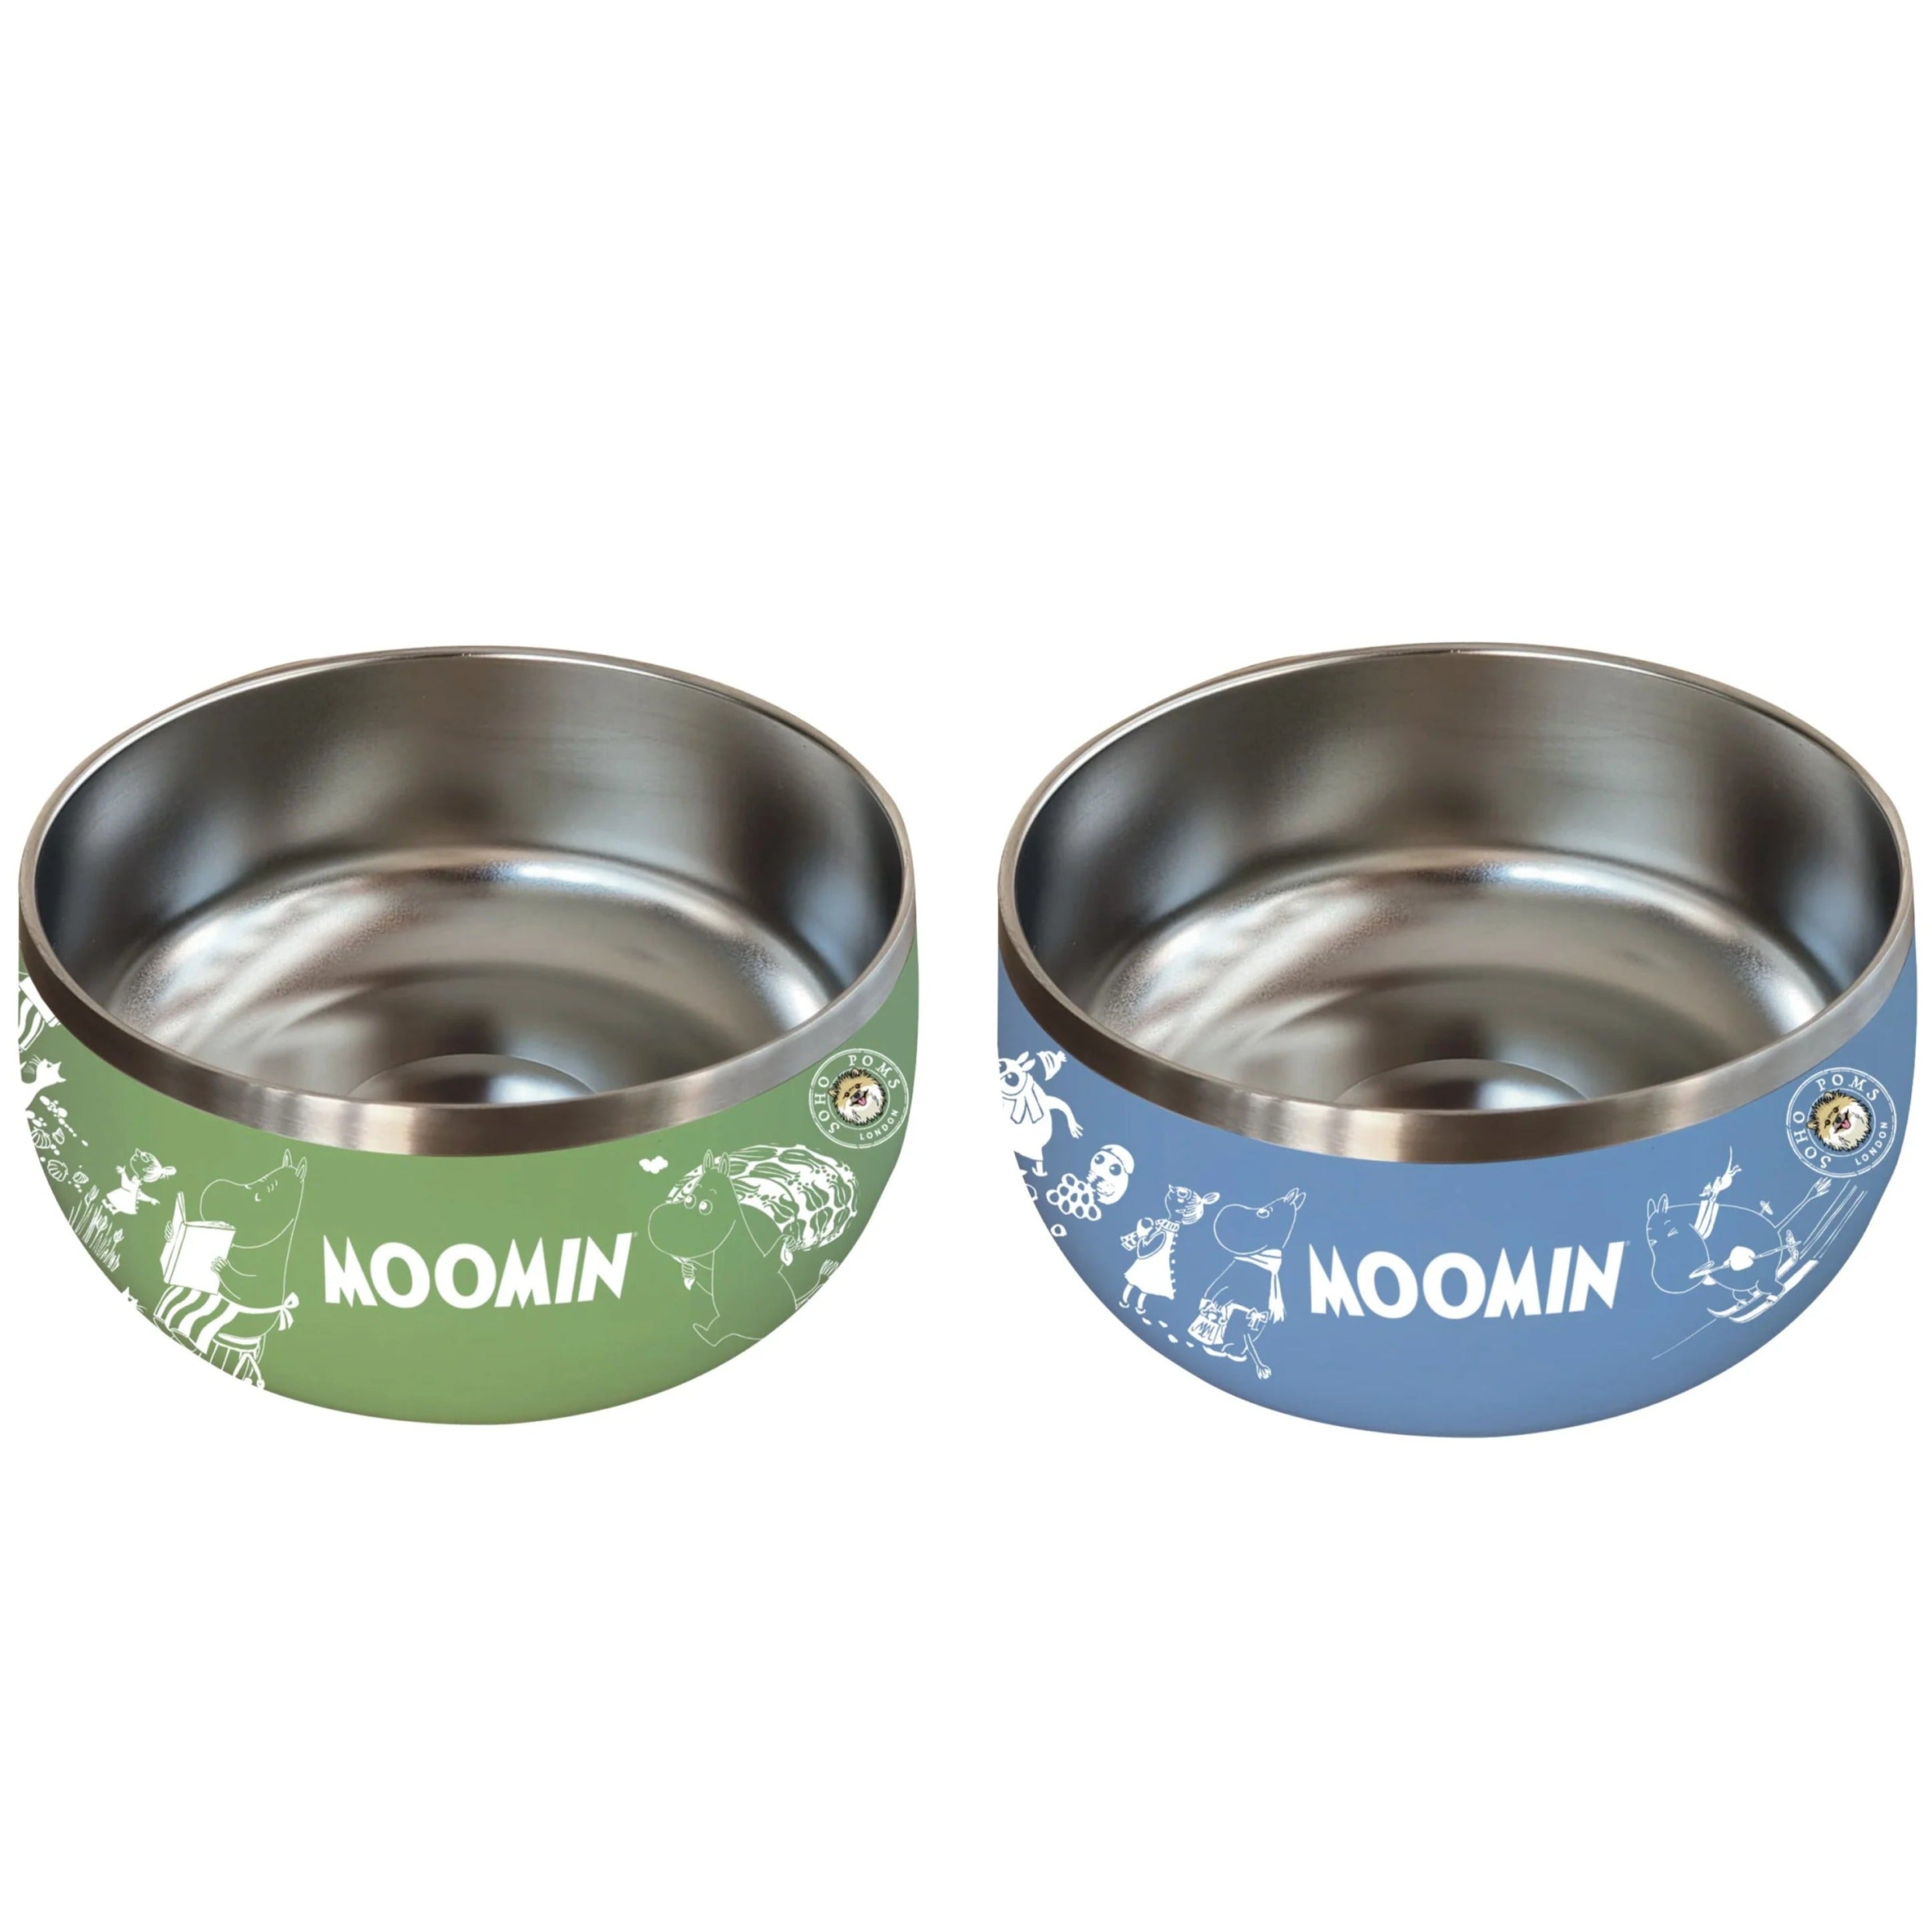 Moomins Lunar Bowl by SohoPoms